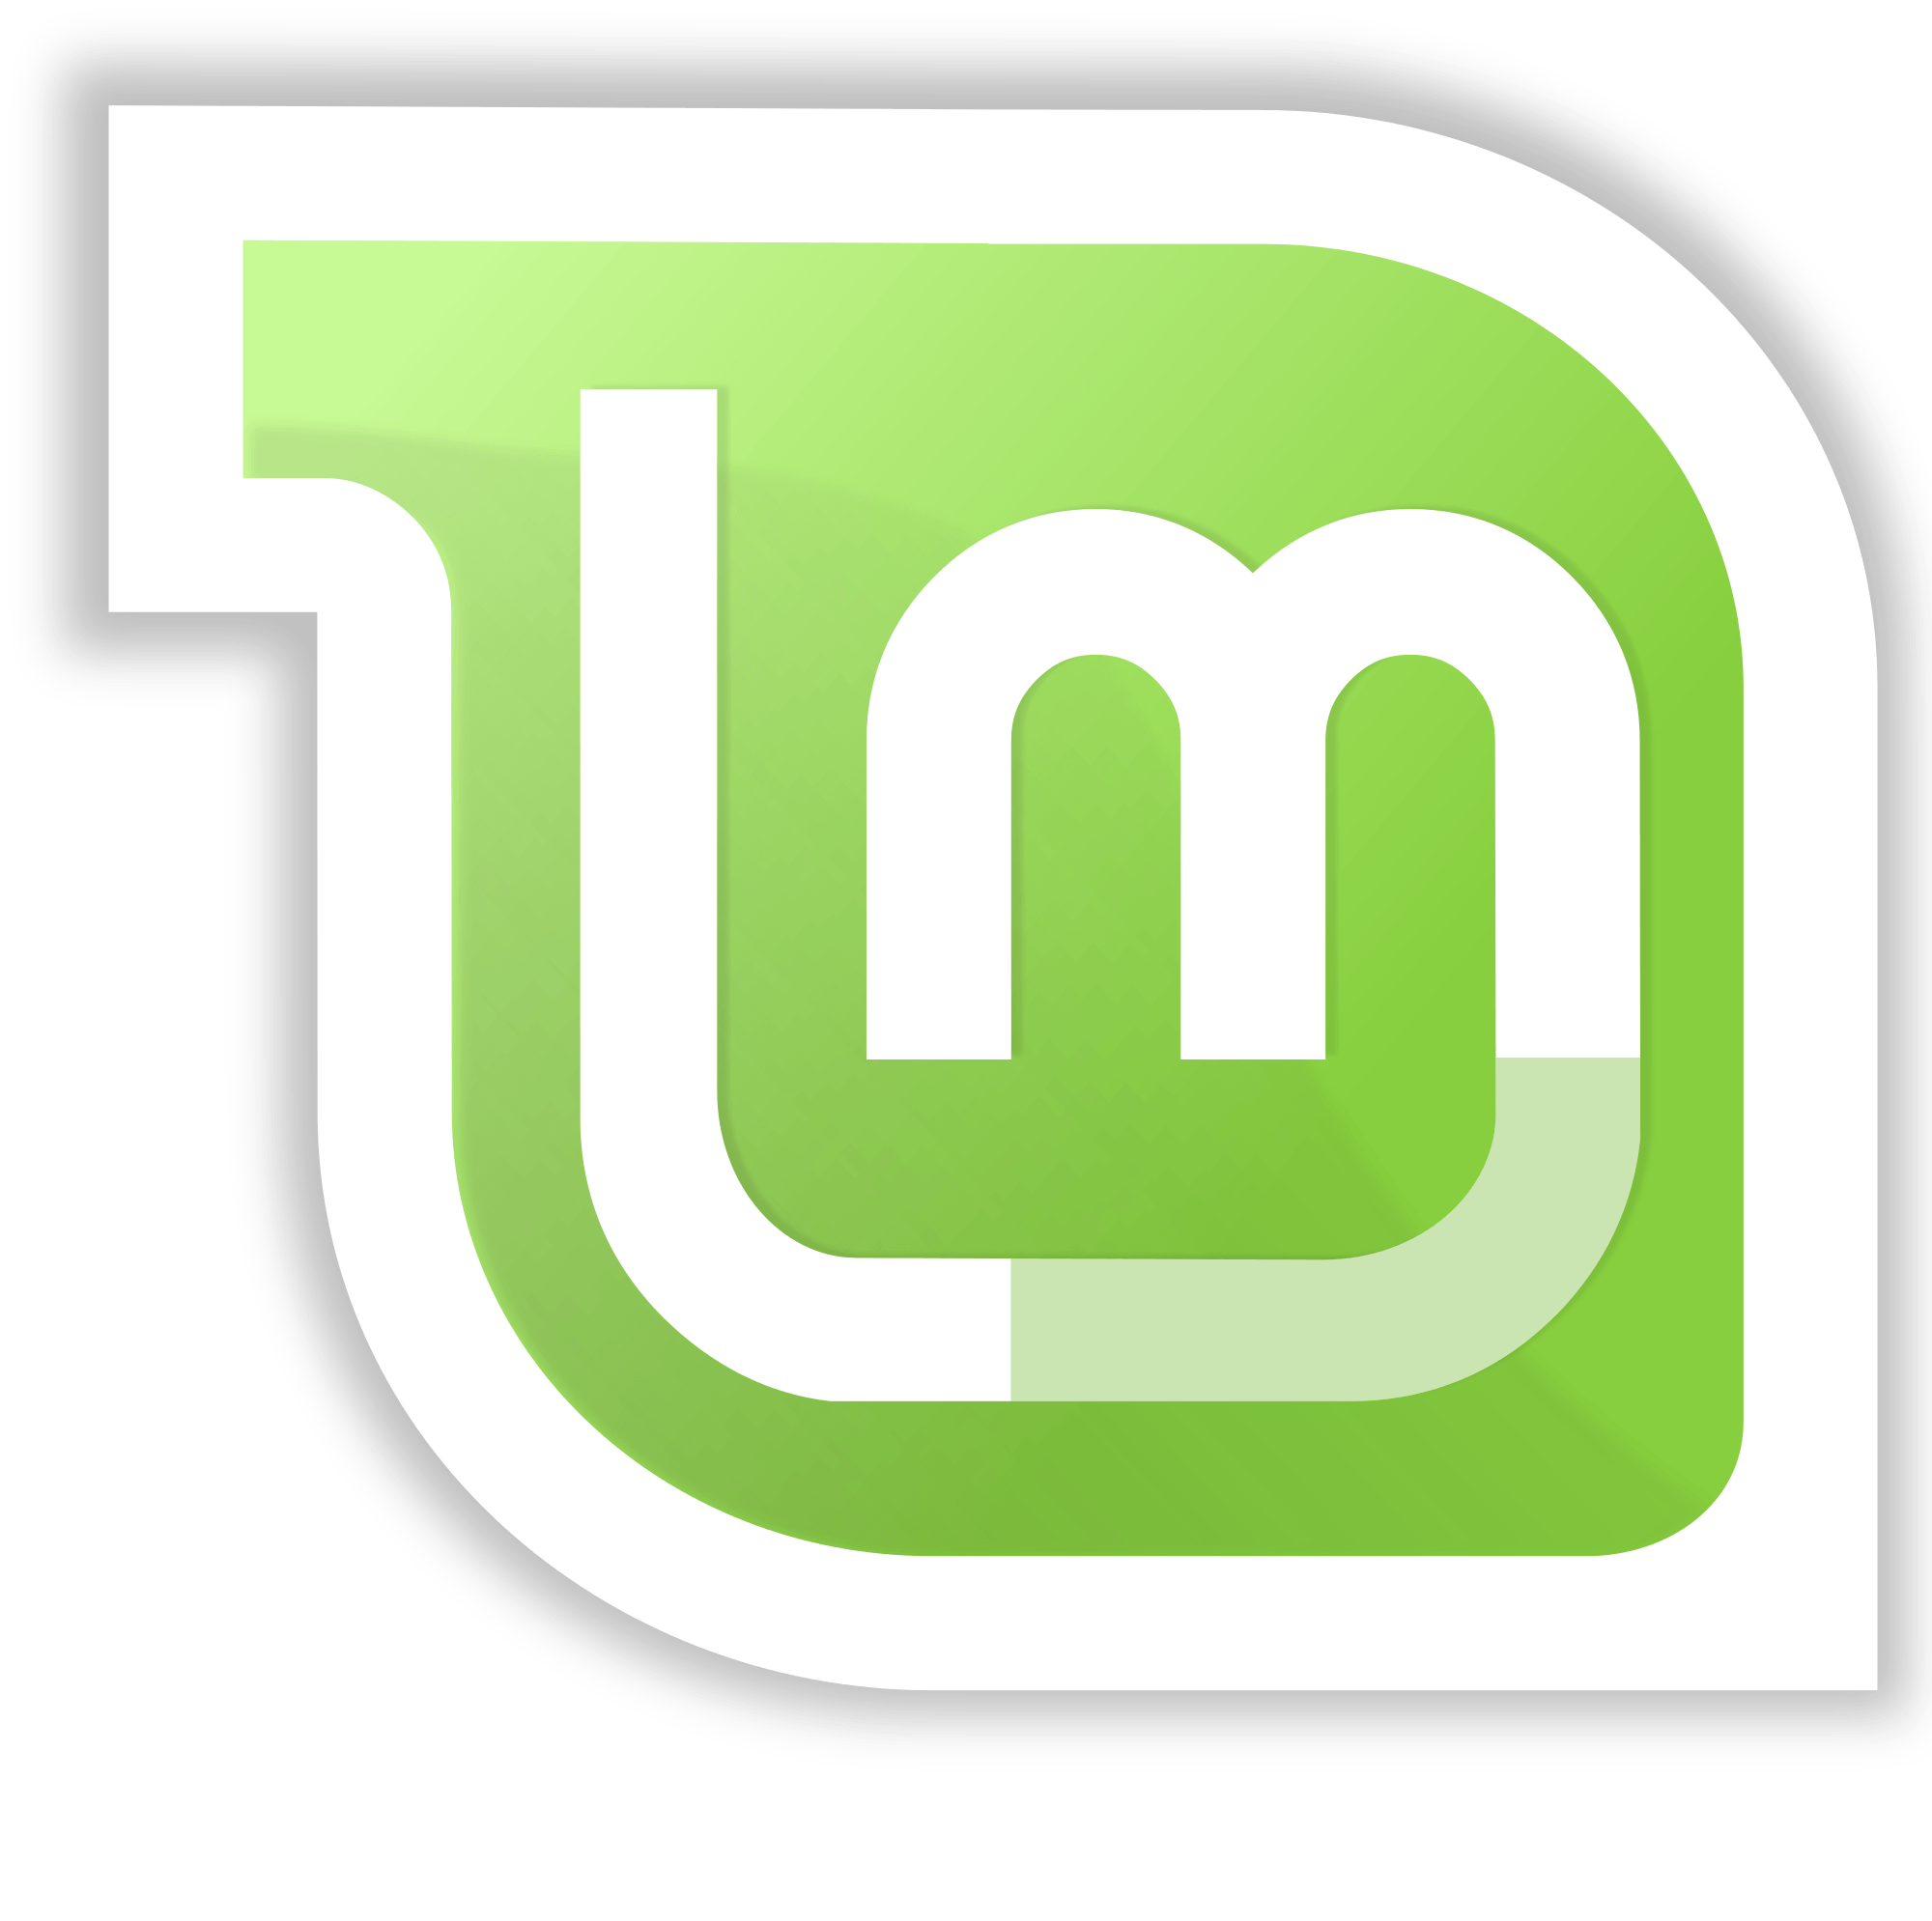 Linux Mint Logo - File:Linux Mint logo without wordmark.svg - Wikimedia Commons